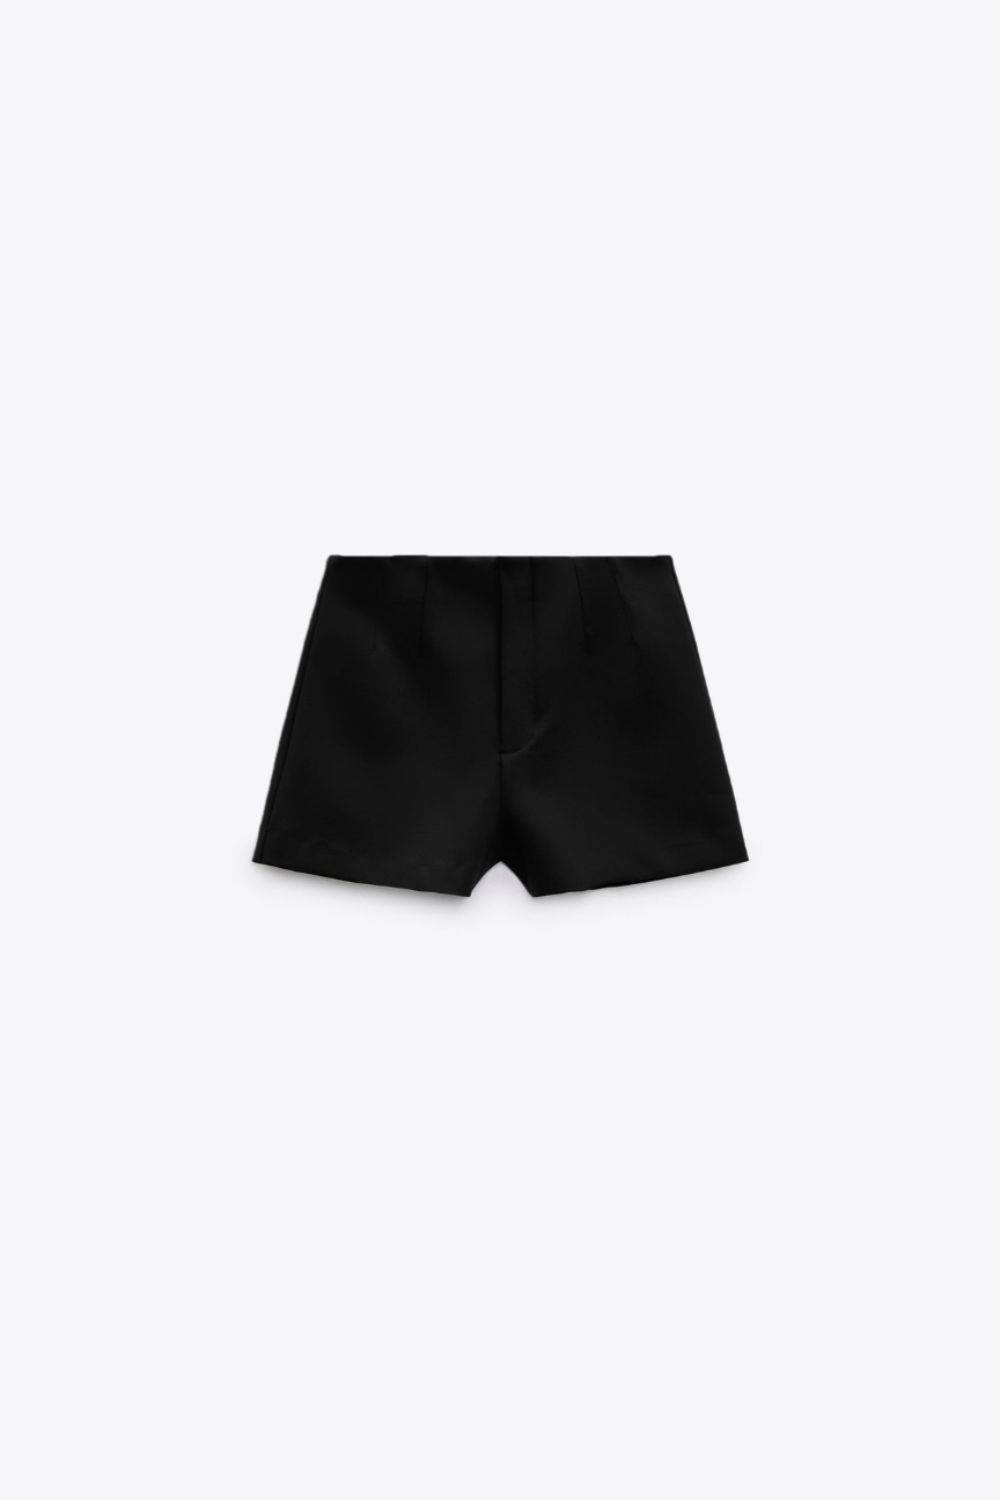 Micro shorts negros